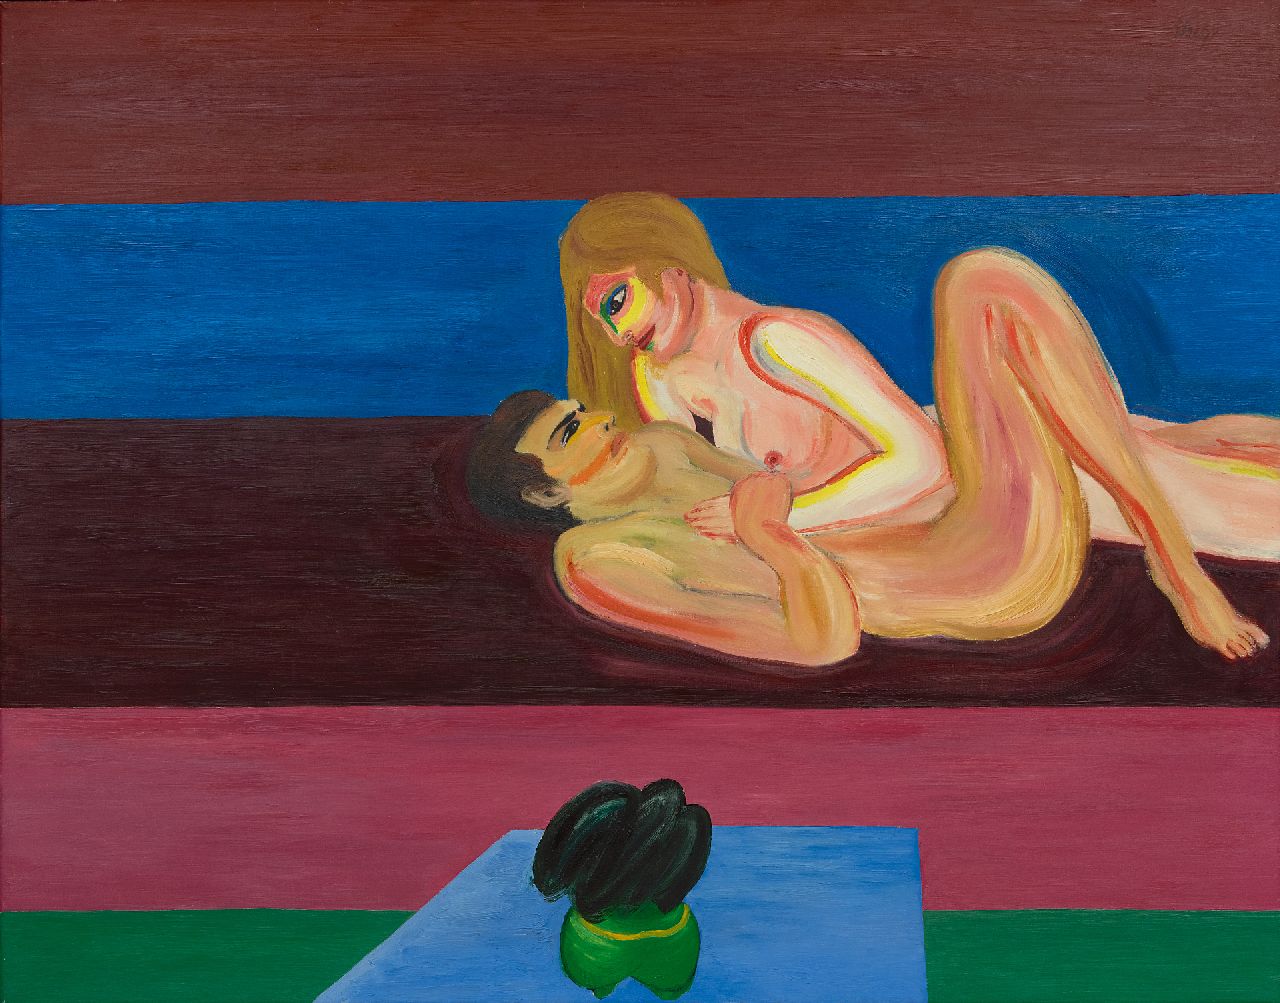 Yvan Theys | Liefdesscène in abstracte ruimte, olieverf op doek, 118,0 x 146,1 cm, gesigneerd r.b. en op spieraam gedateerd 1975